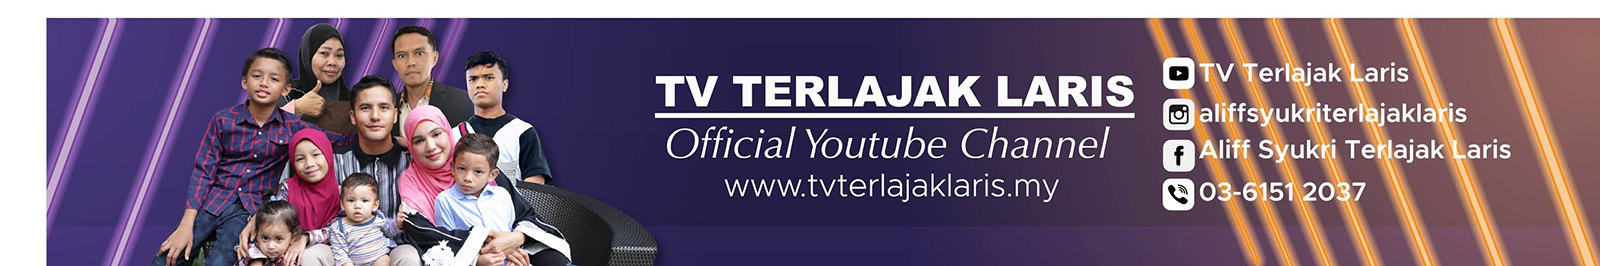 TV Terlajak Laris YouTube Channel